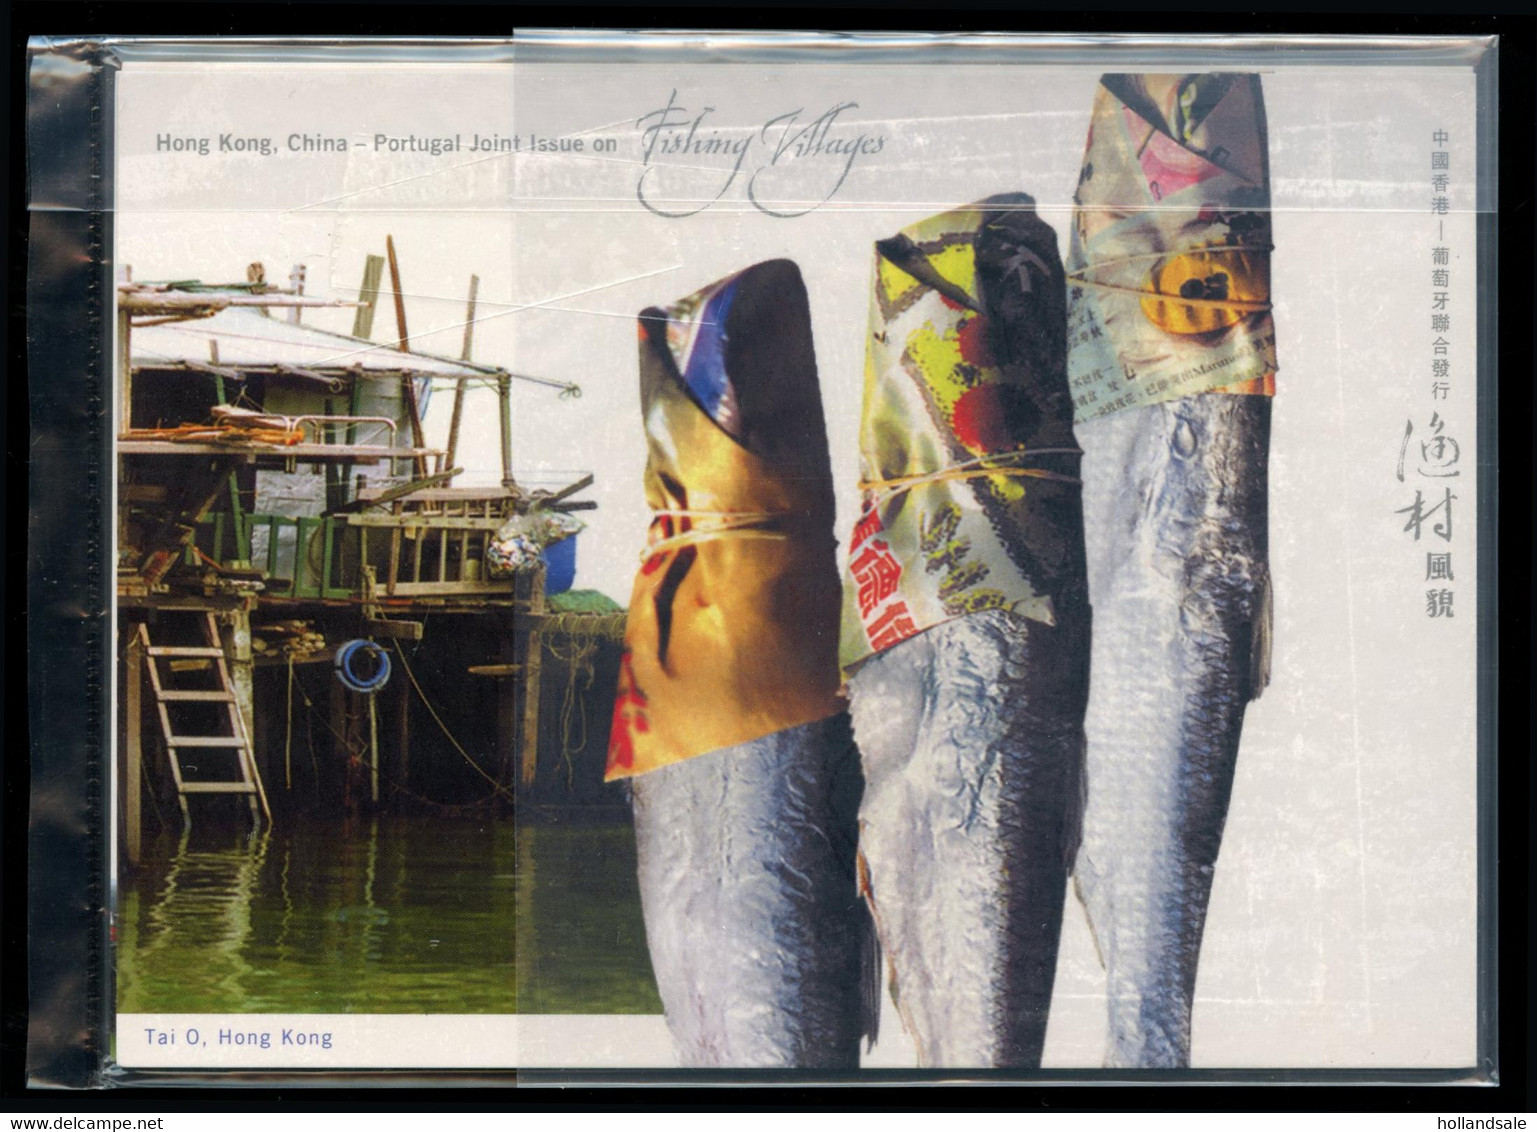 CHINA / HONG KONG - 2005 Joint Issue On Fishing Villages. Unopened Postcards. Set 30. - Postwaardestukken